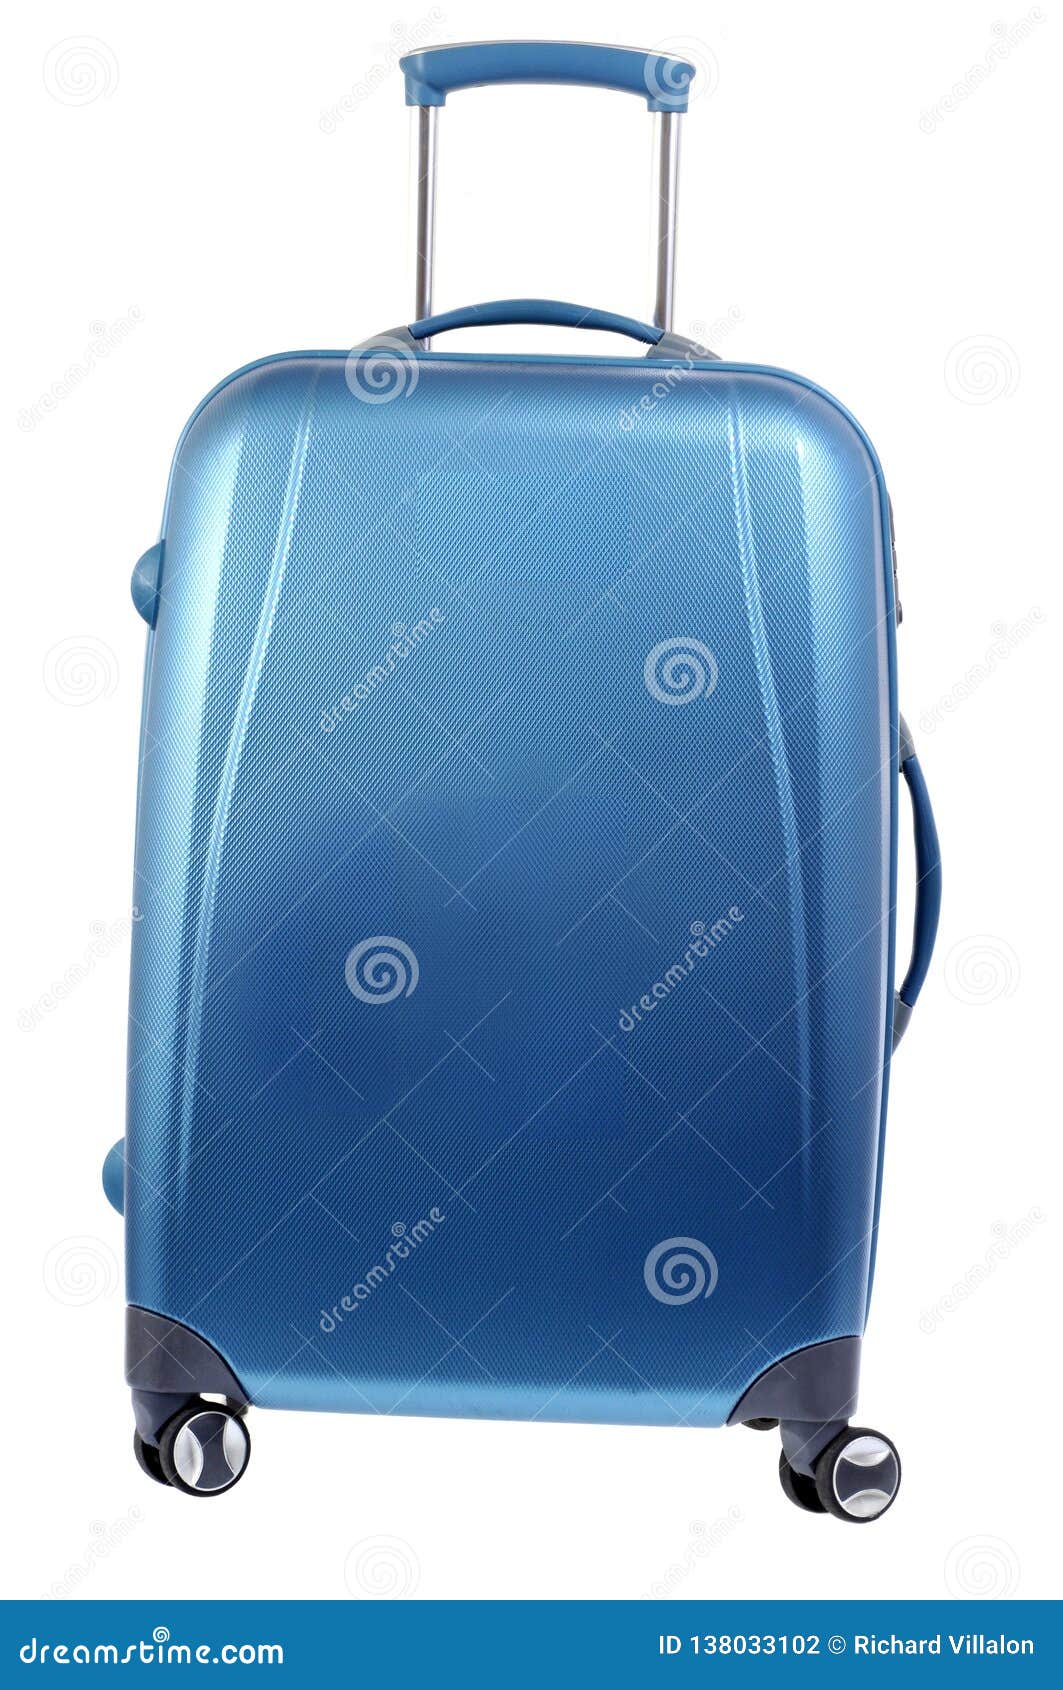 Blue suitcase with wheels stock photo. Image of background - 138033102